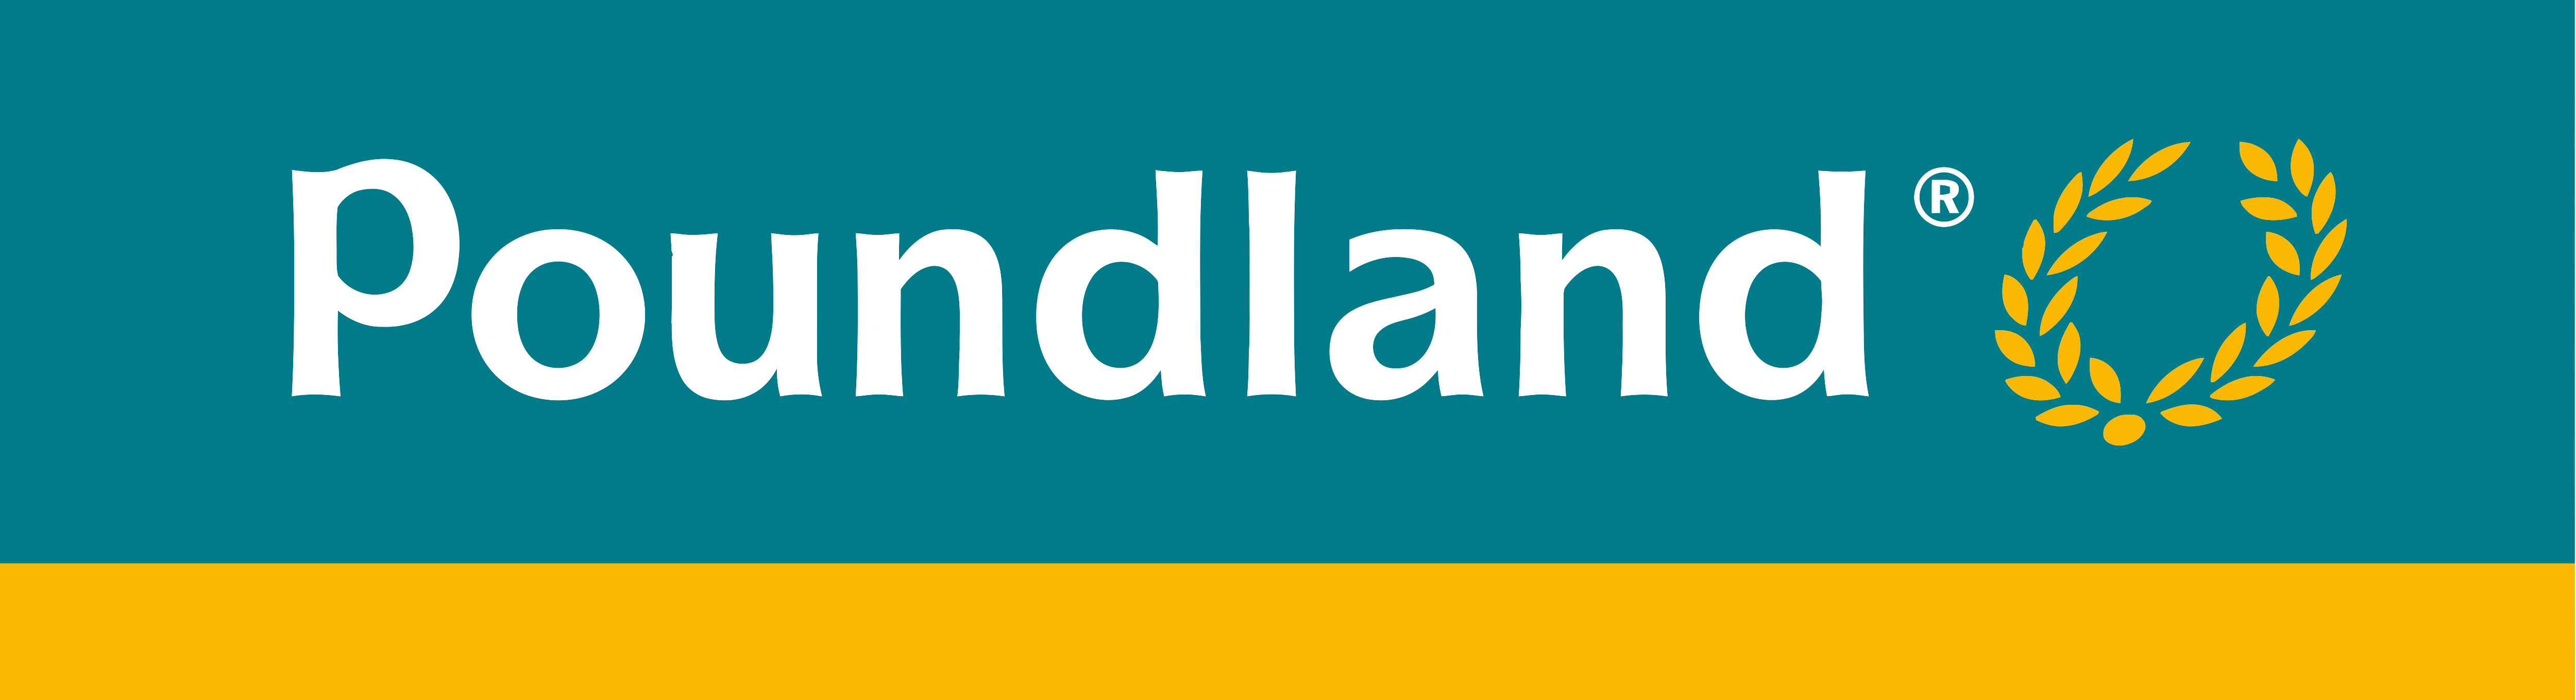 poundland-logo